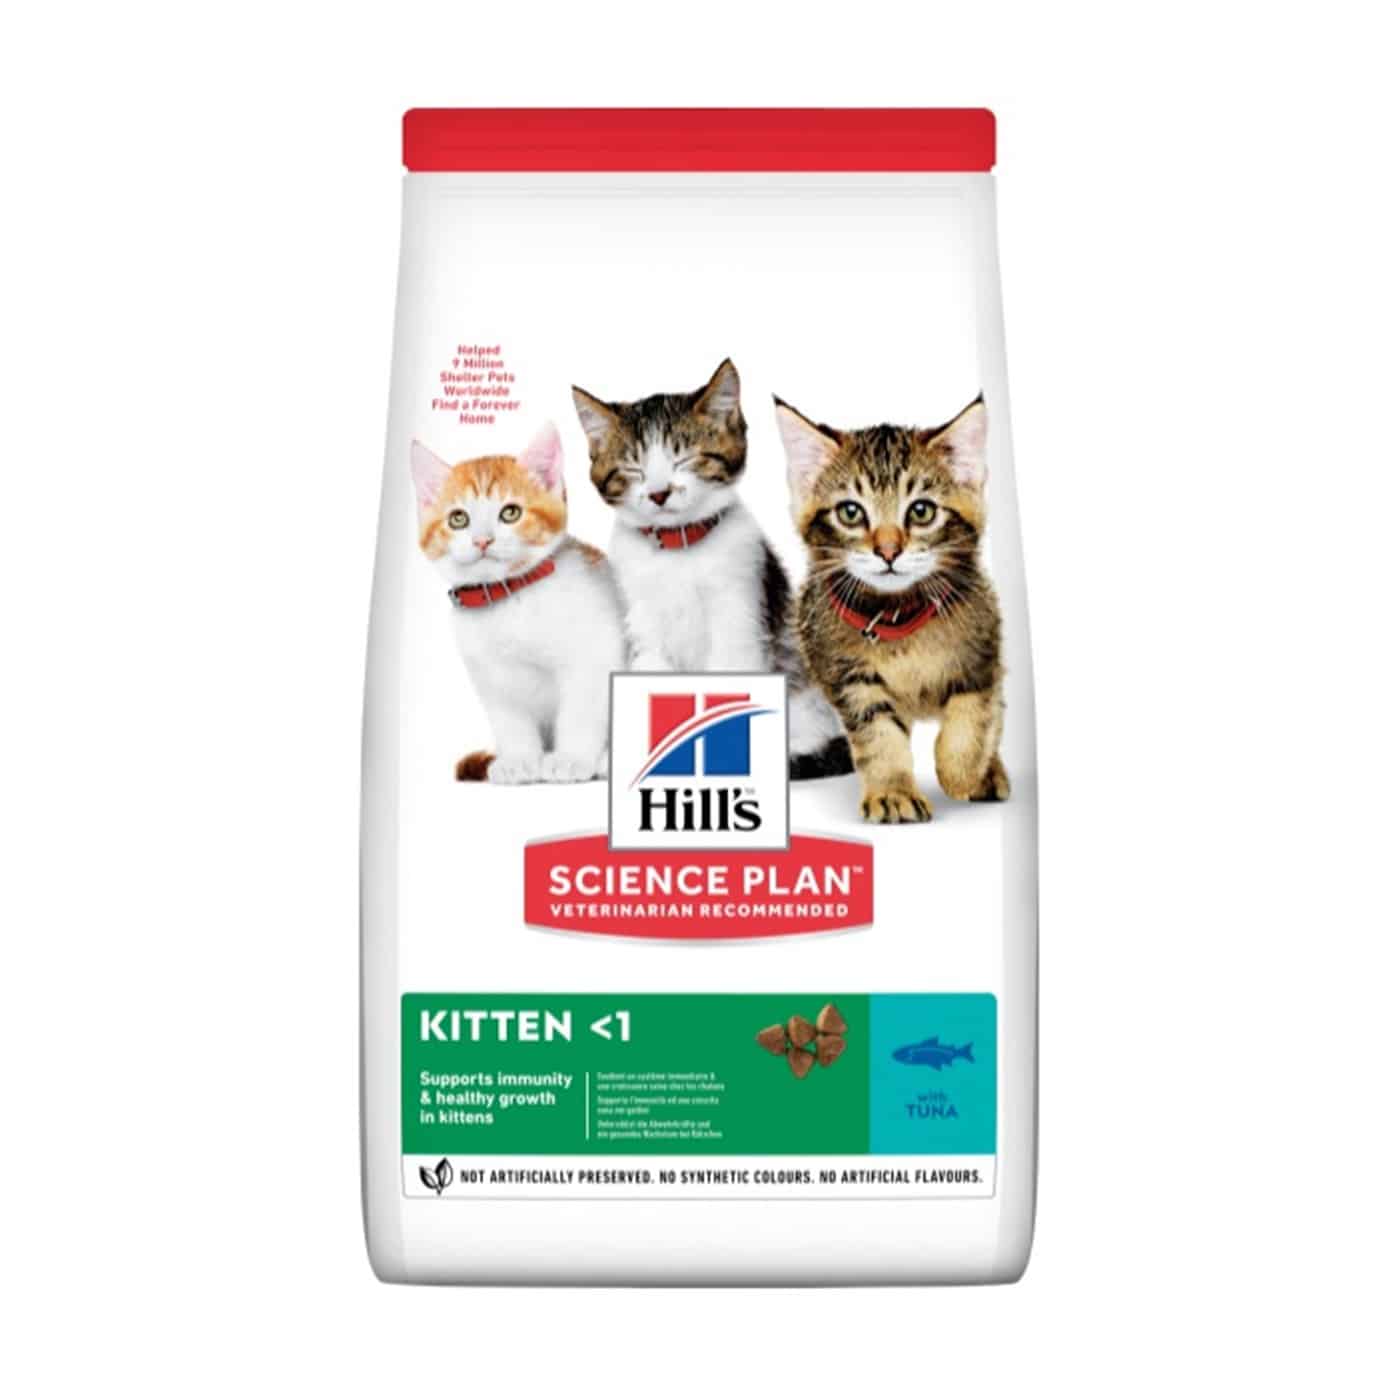 Hills dry food for kittens, tuna taste, 1.5 kg